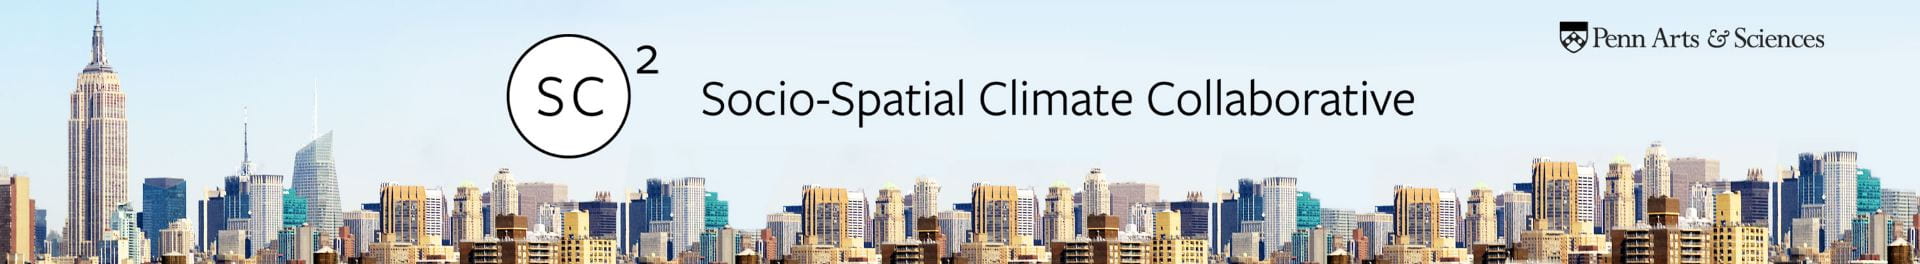 Socio-Spatial Climate Collaborative, or (SC)2